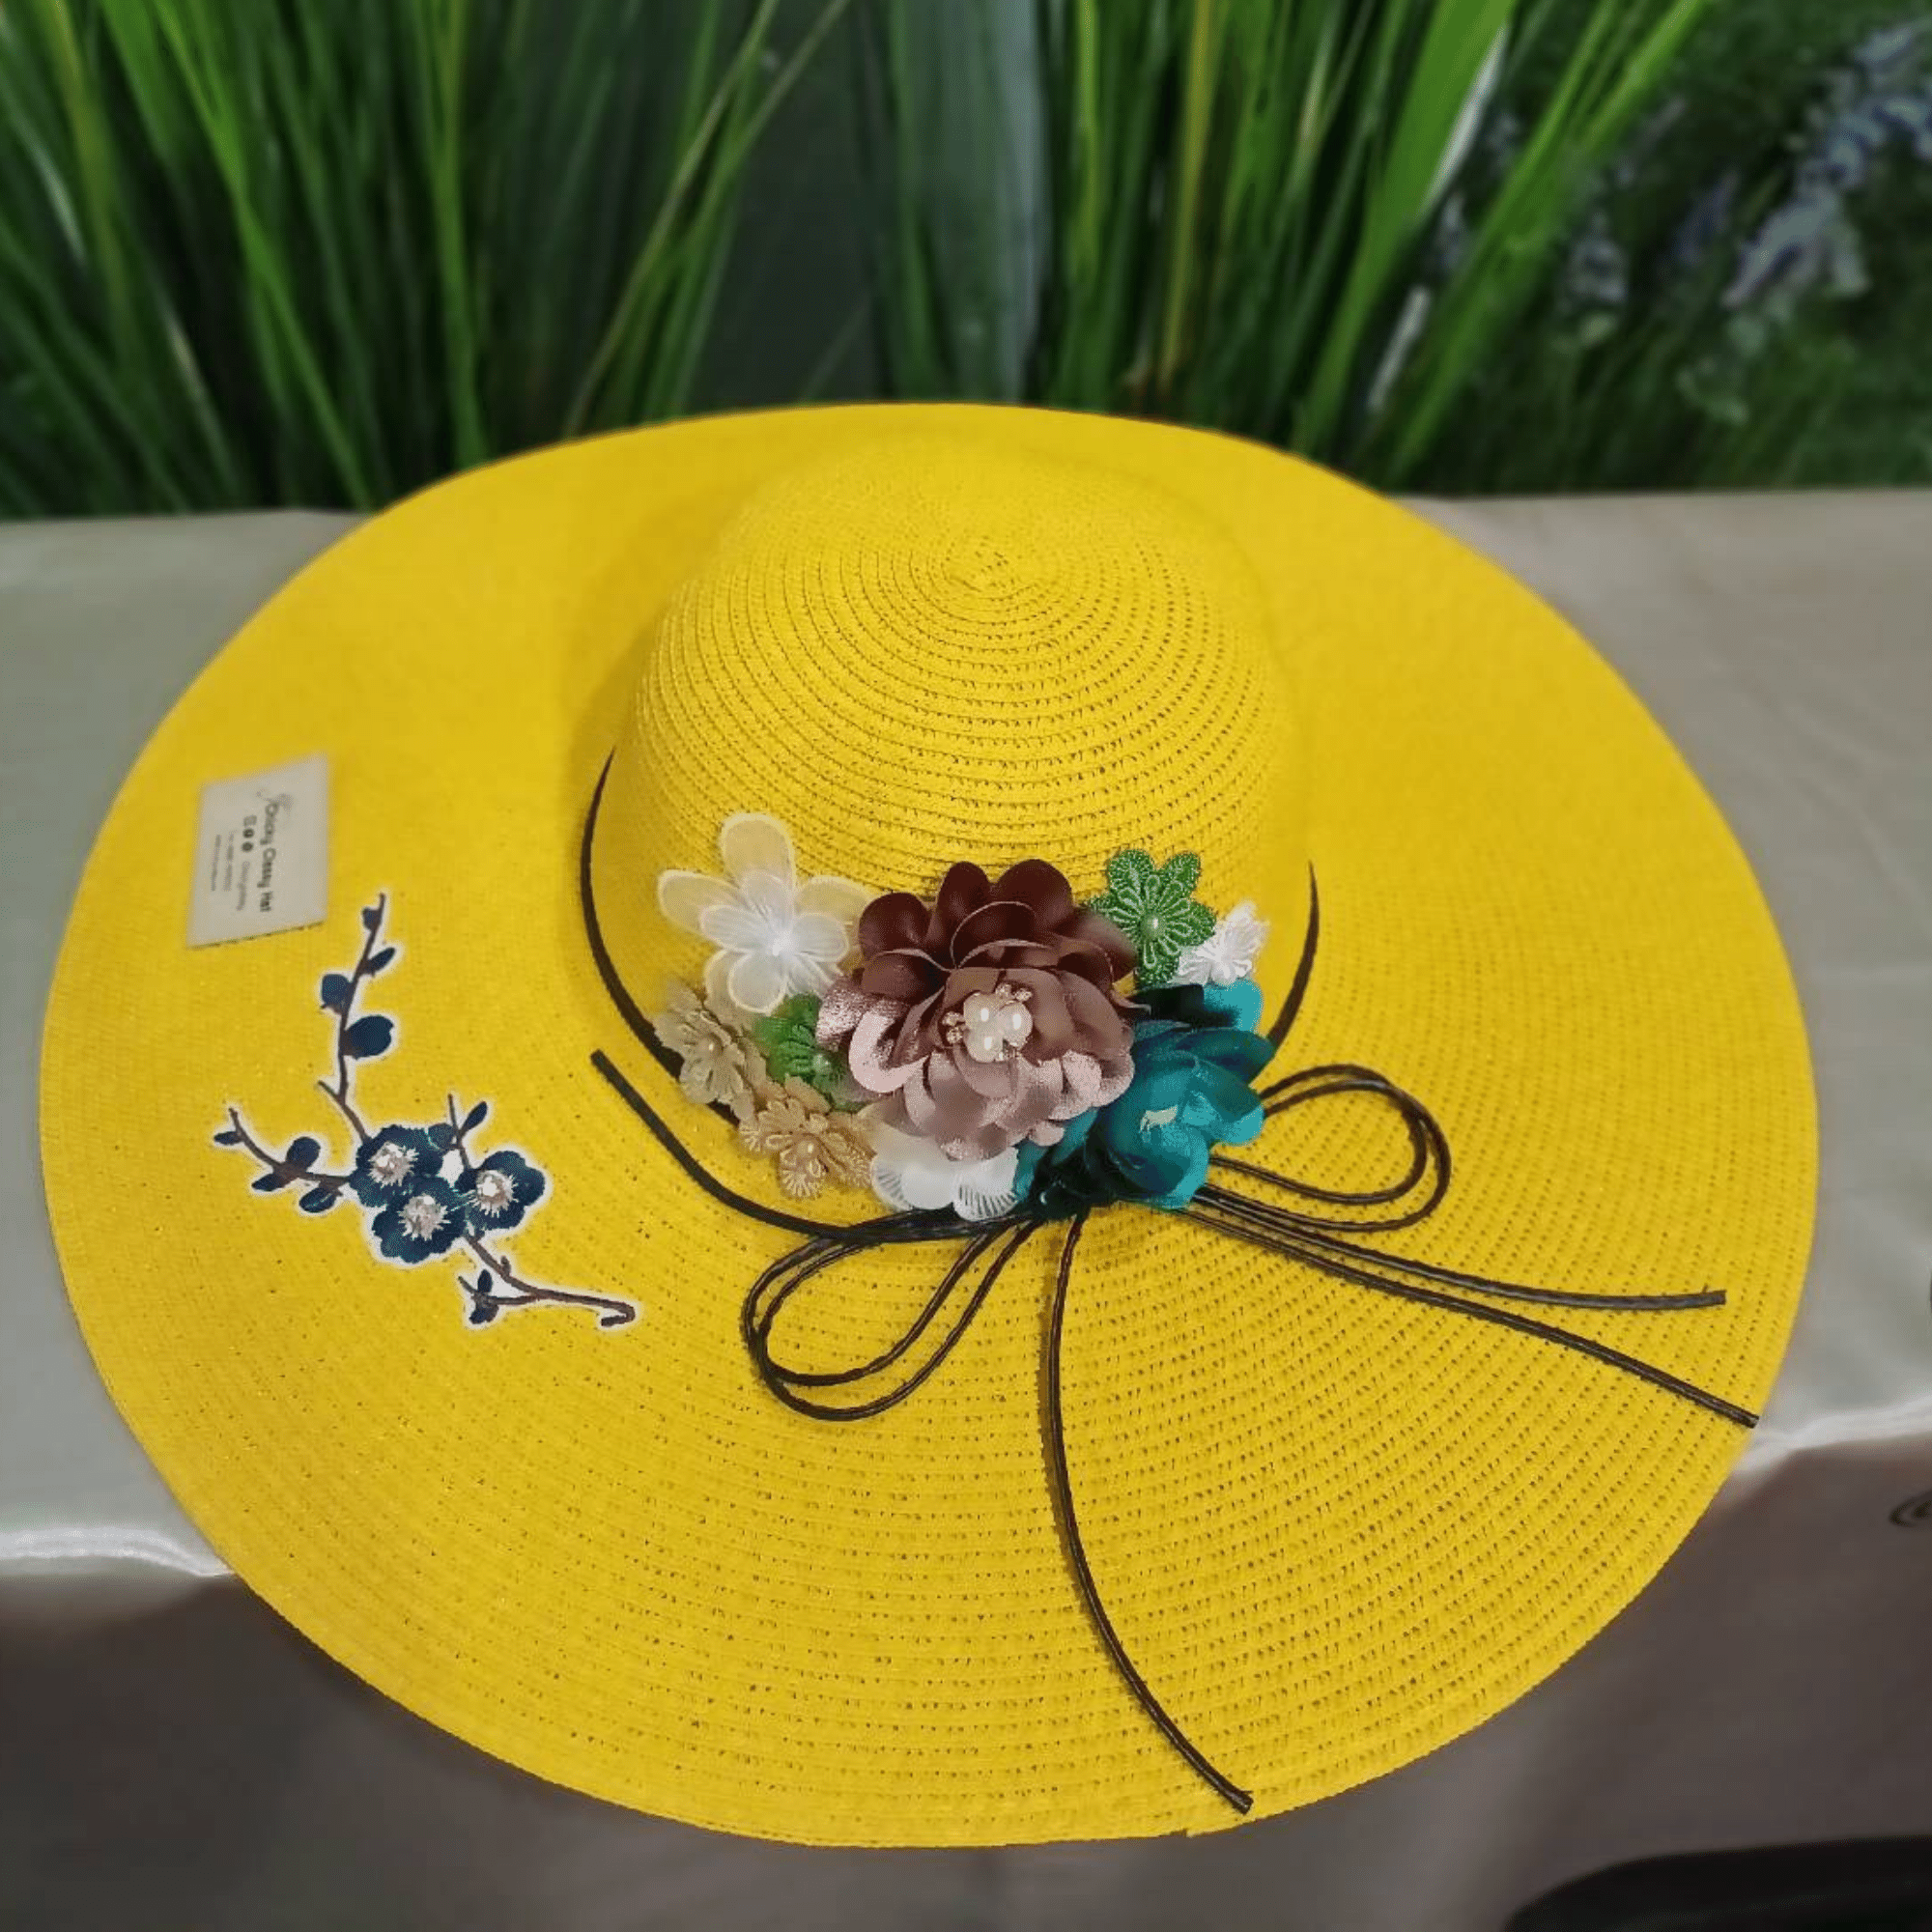 Classy summer beach wedding hats large size